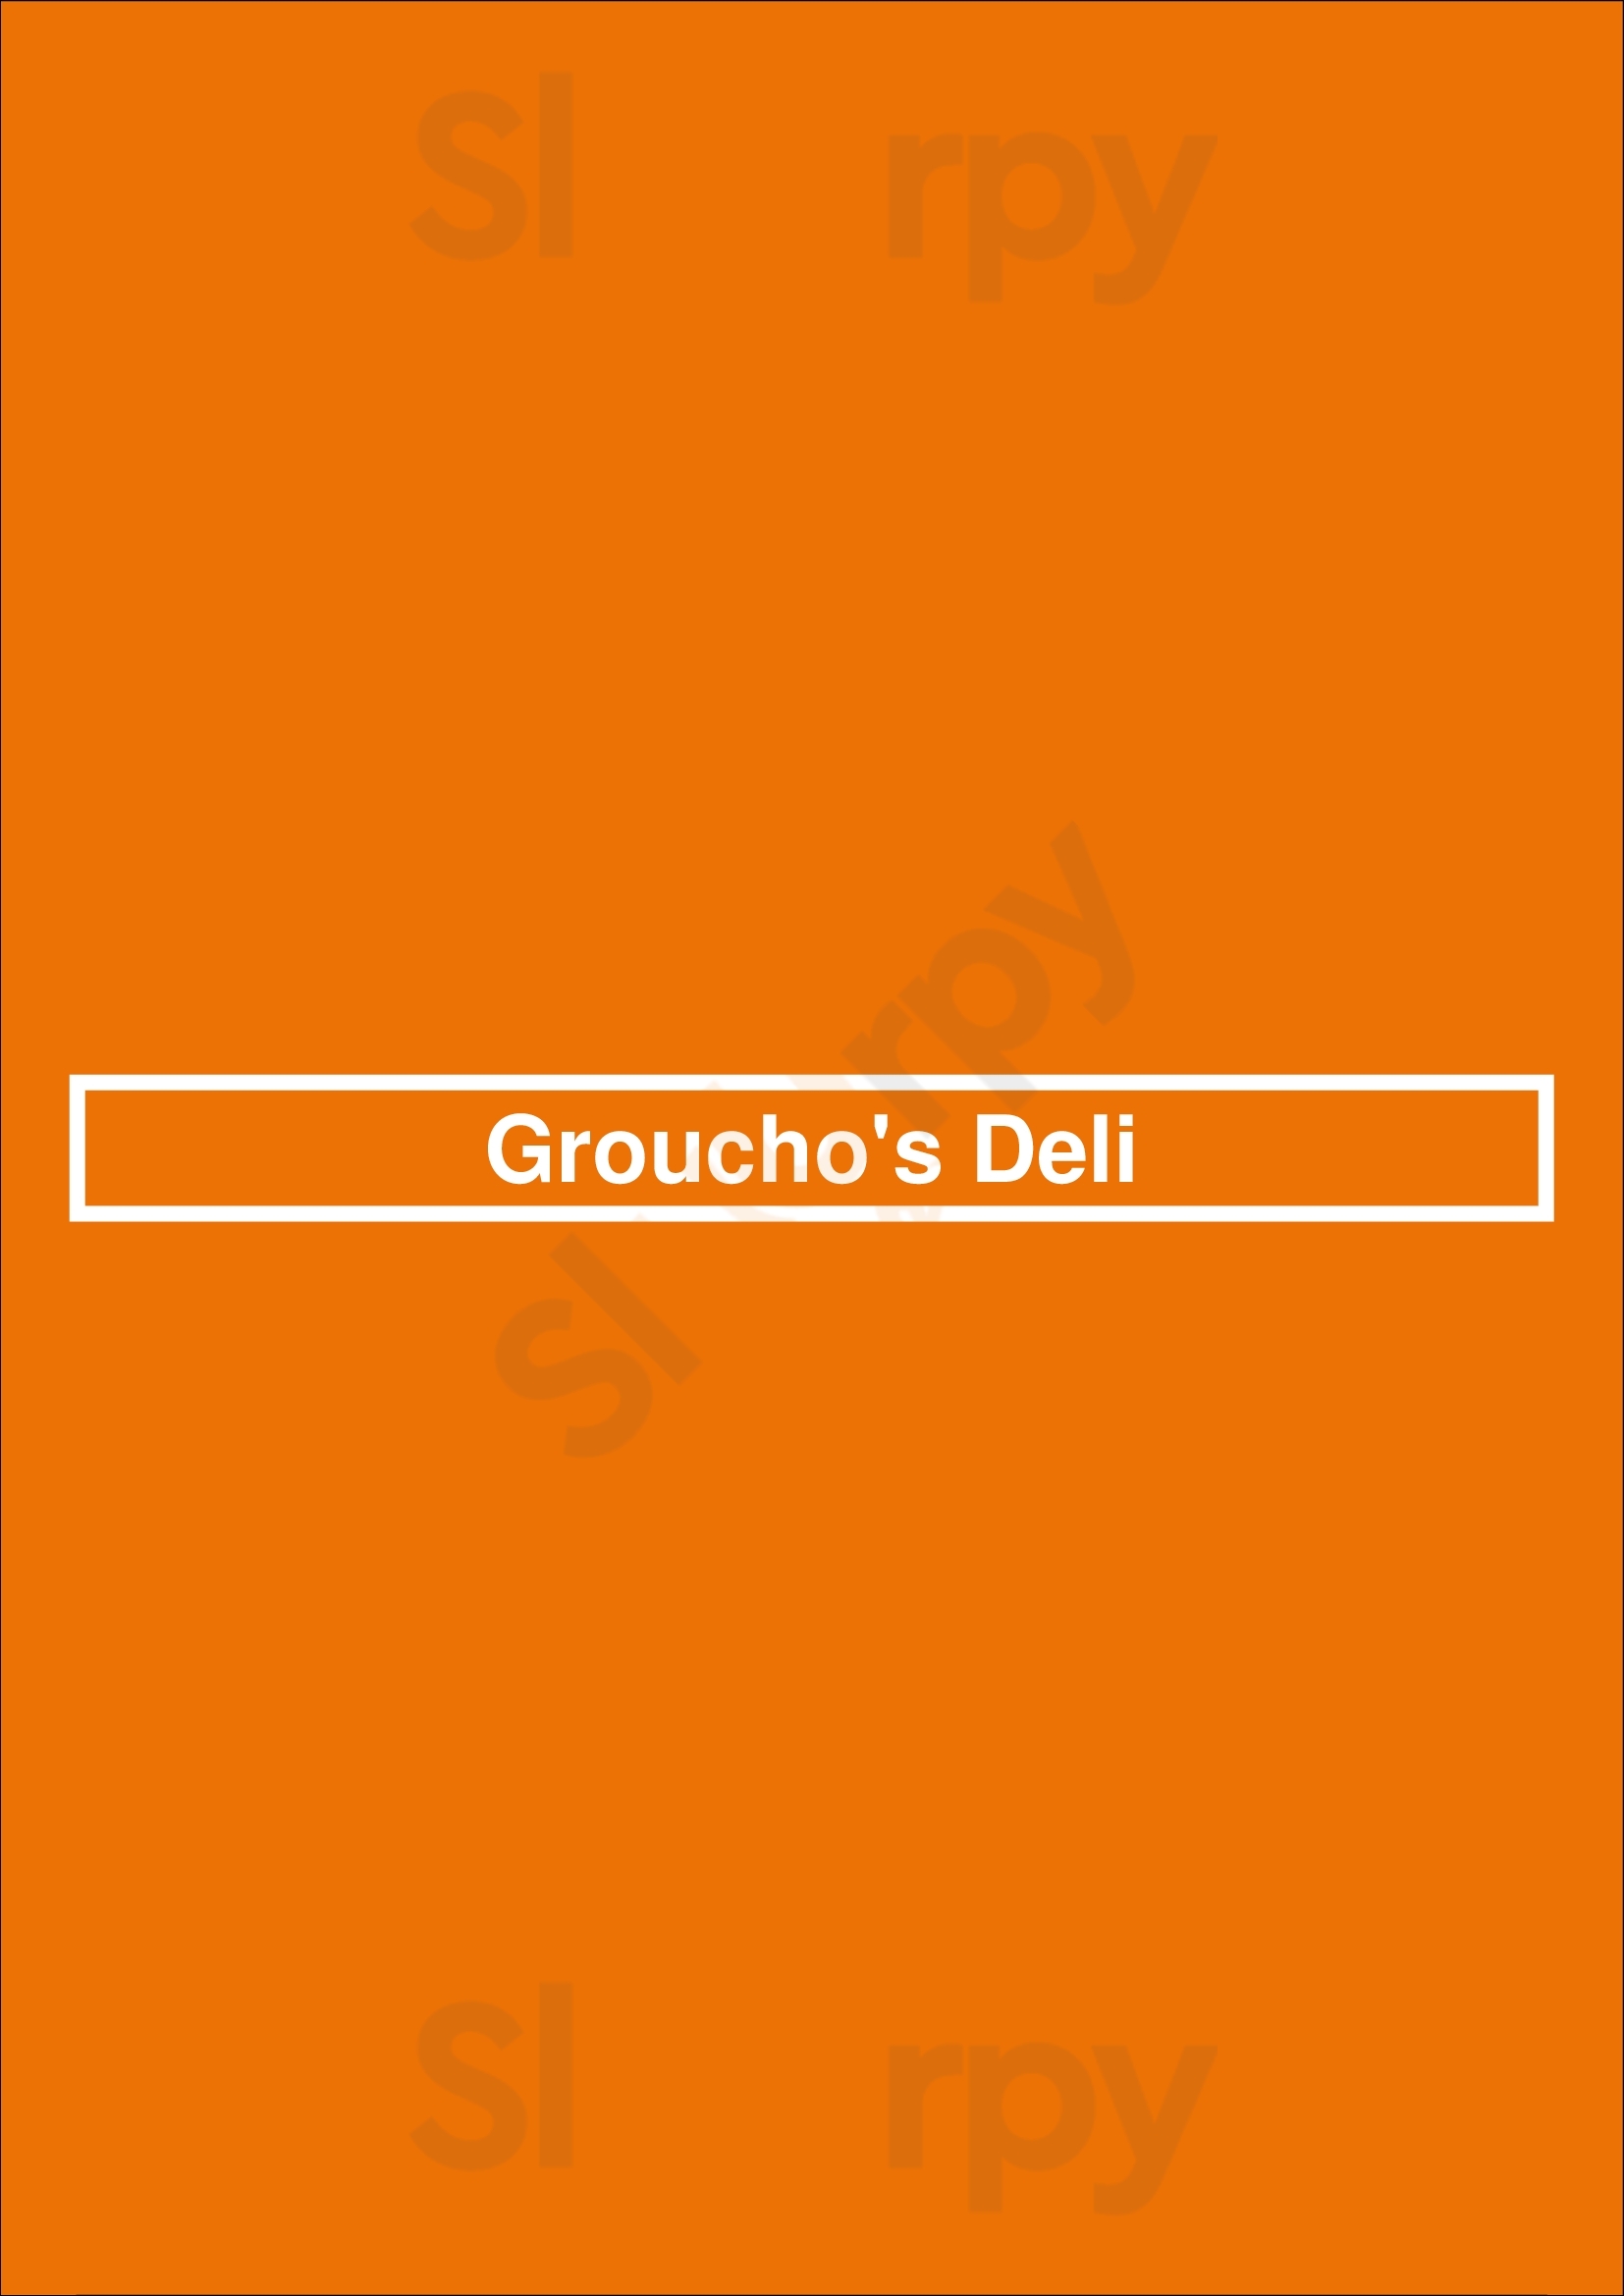 Groucho's Deli Charlotte Menu - 1